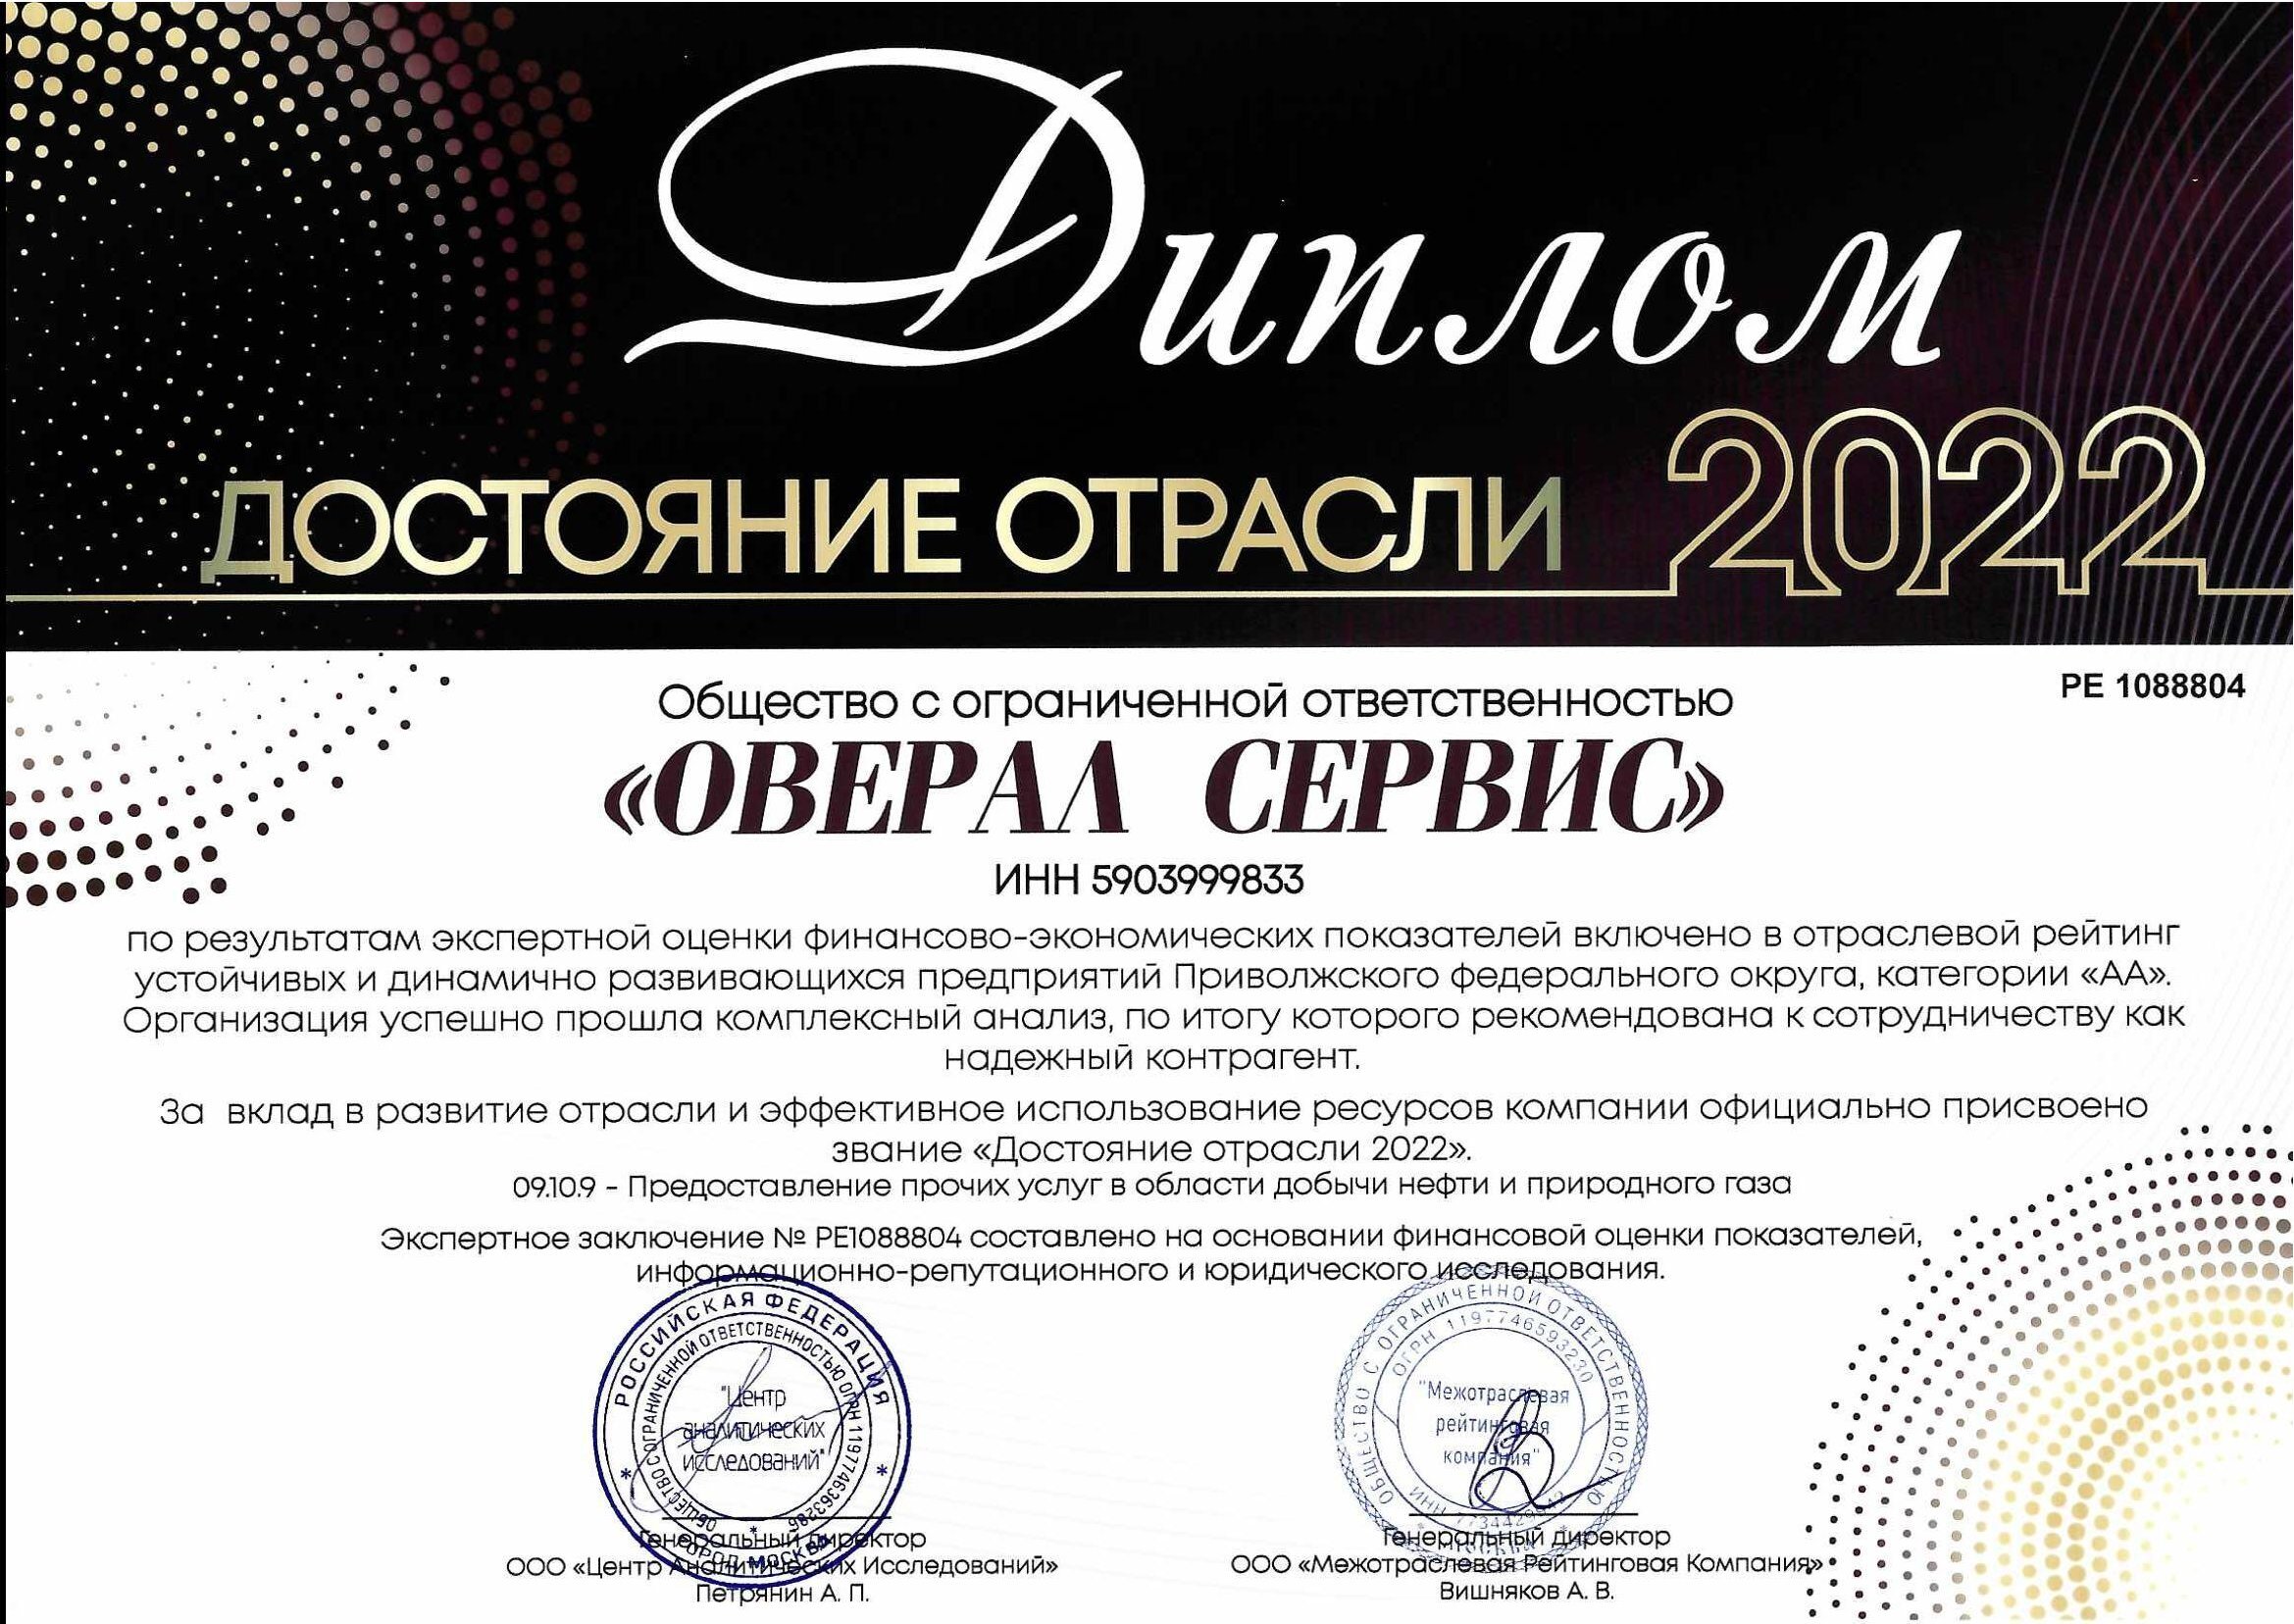 ООО "Оверал Сервис" удостоено звания "Достояние отрасли 2022"